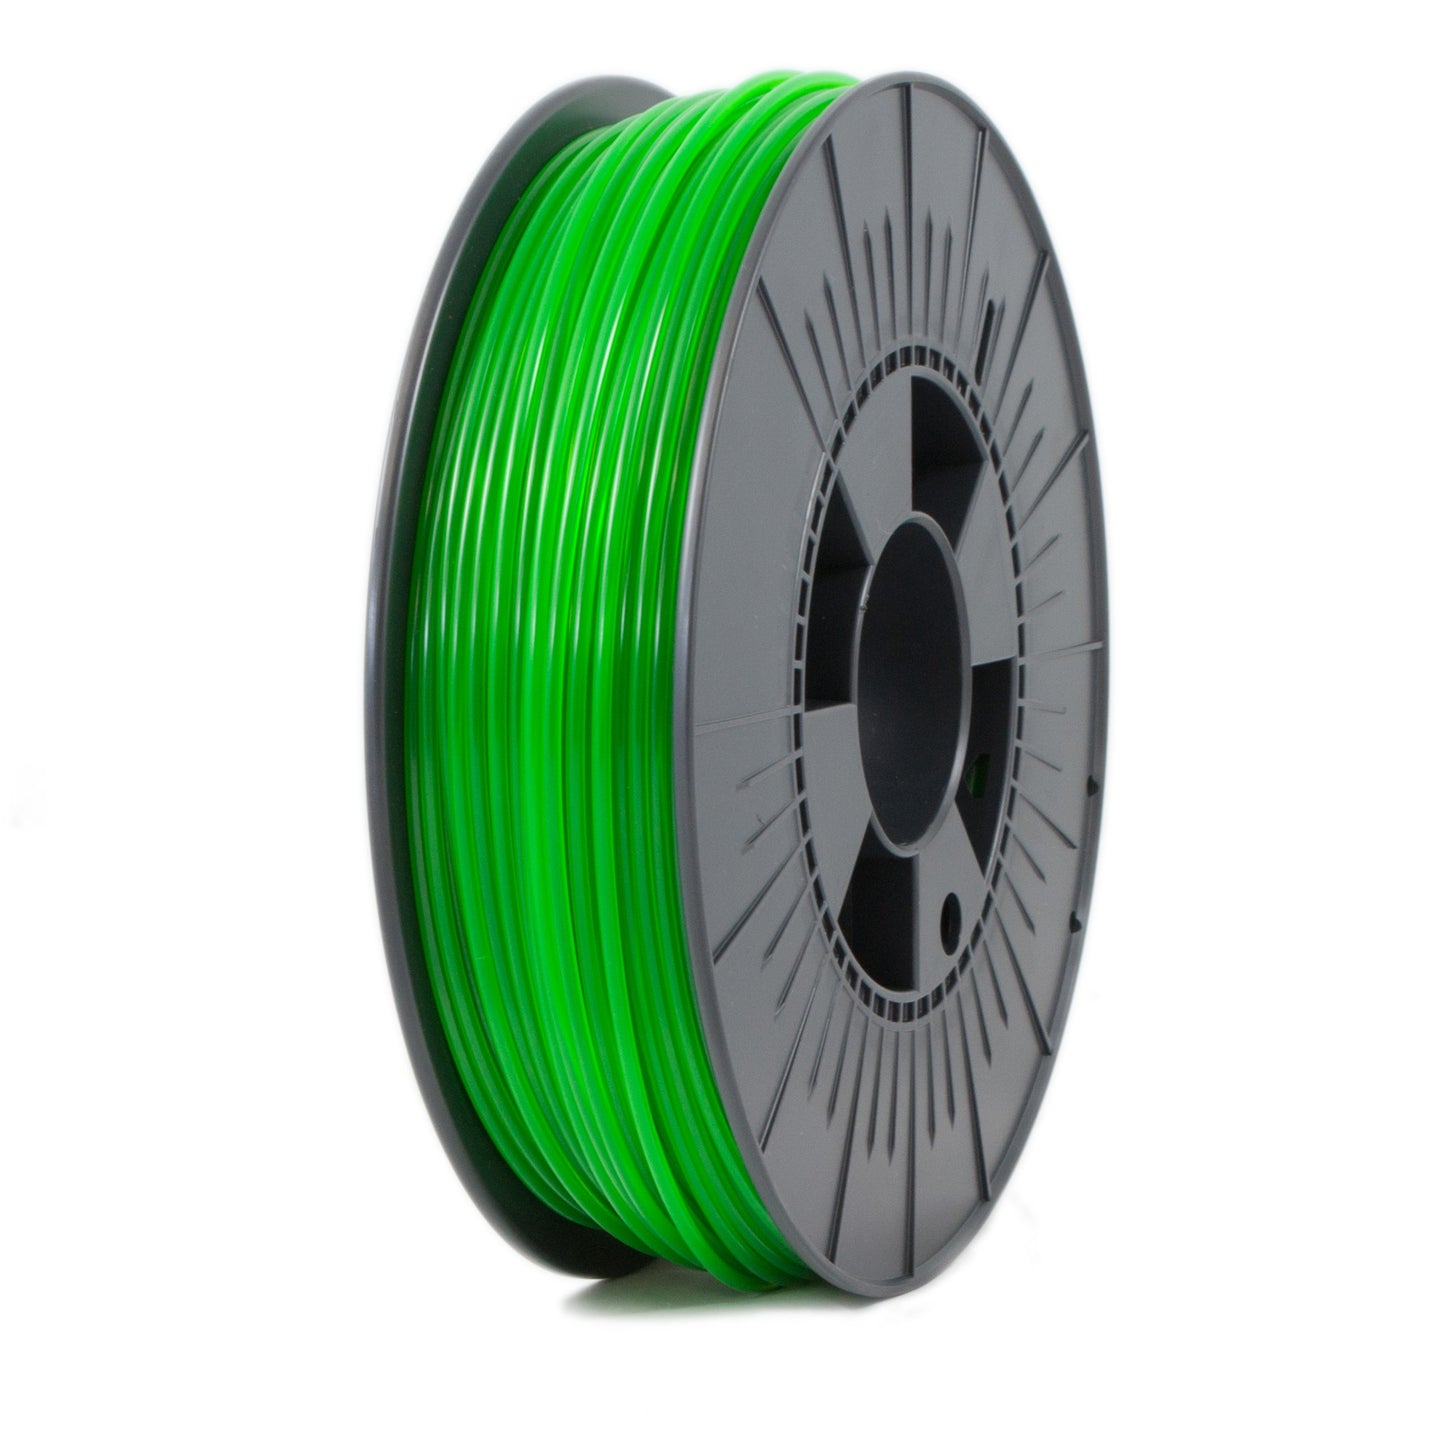 TRANS-ABS Filament 2,85 grün transluzent